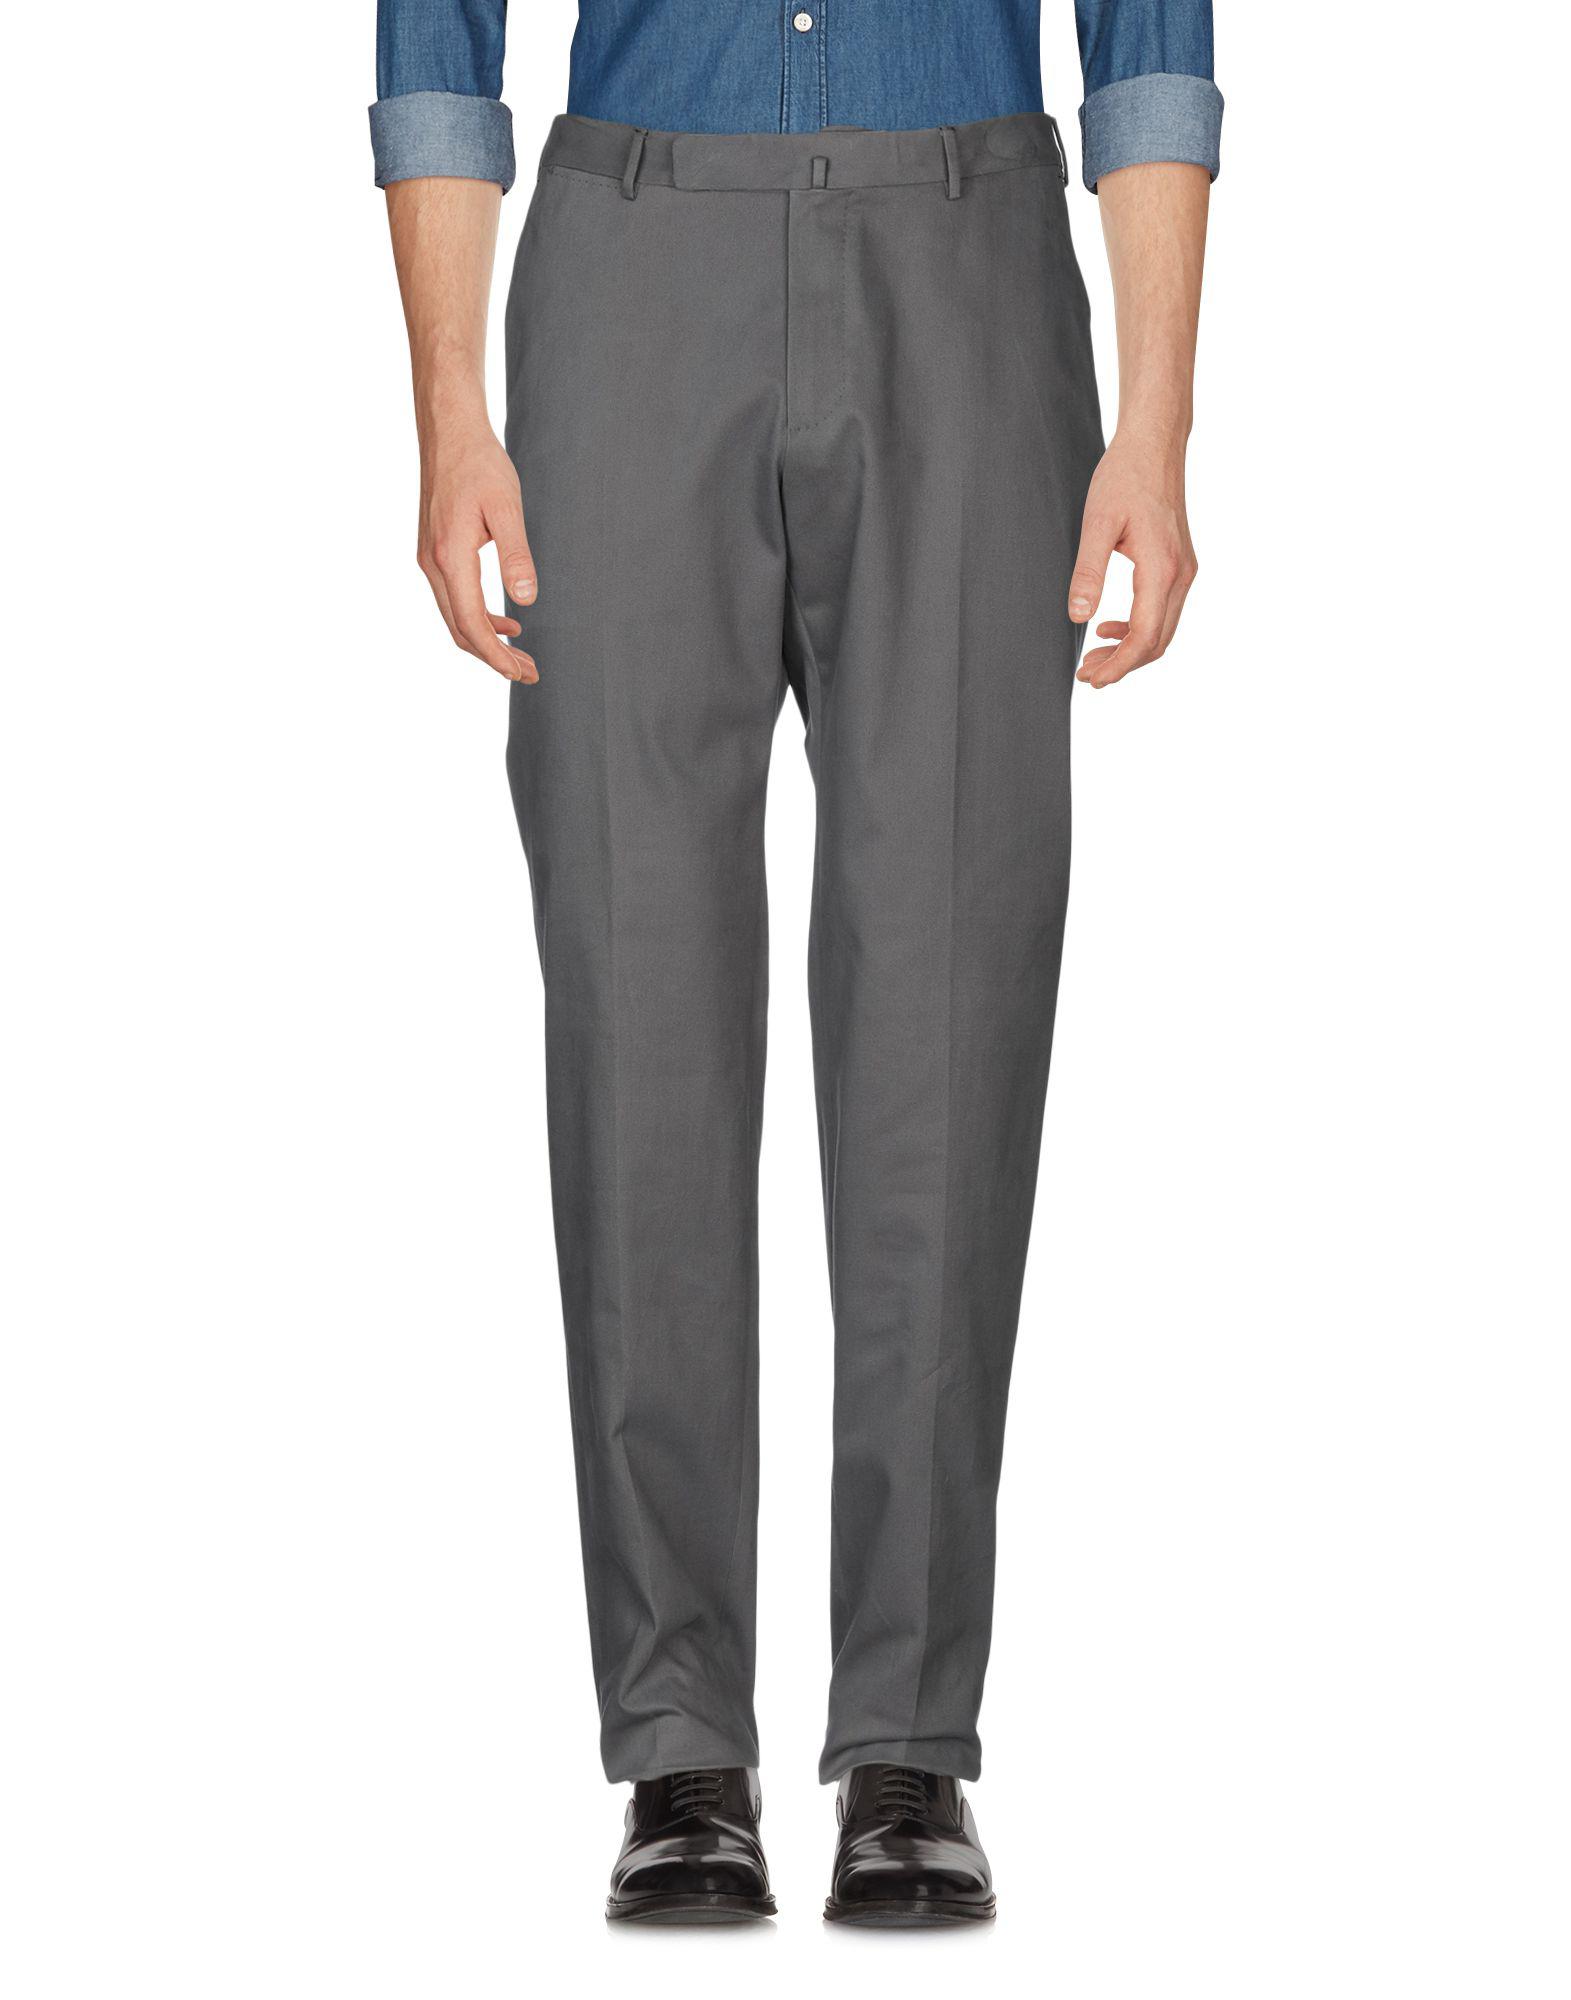 Ermenegildo Zegna Cotton Casual Pants in Lead (Gray) for Men - Lyst